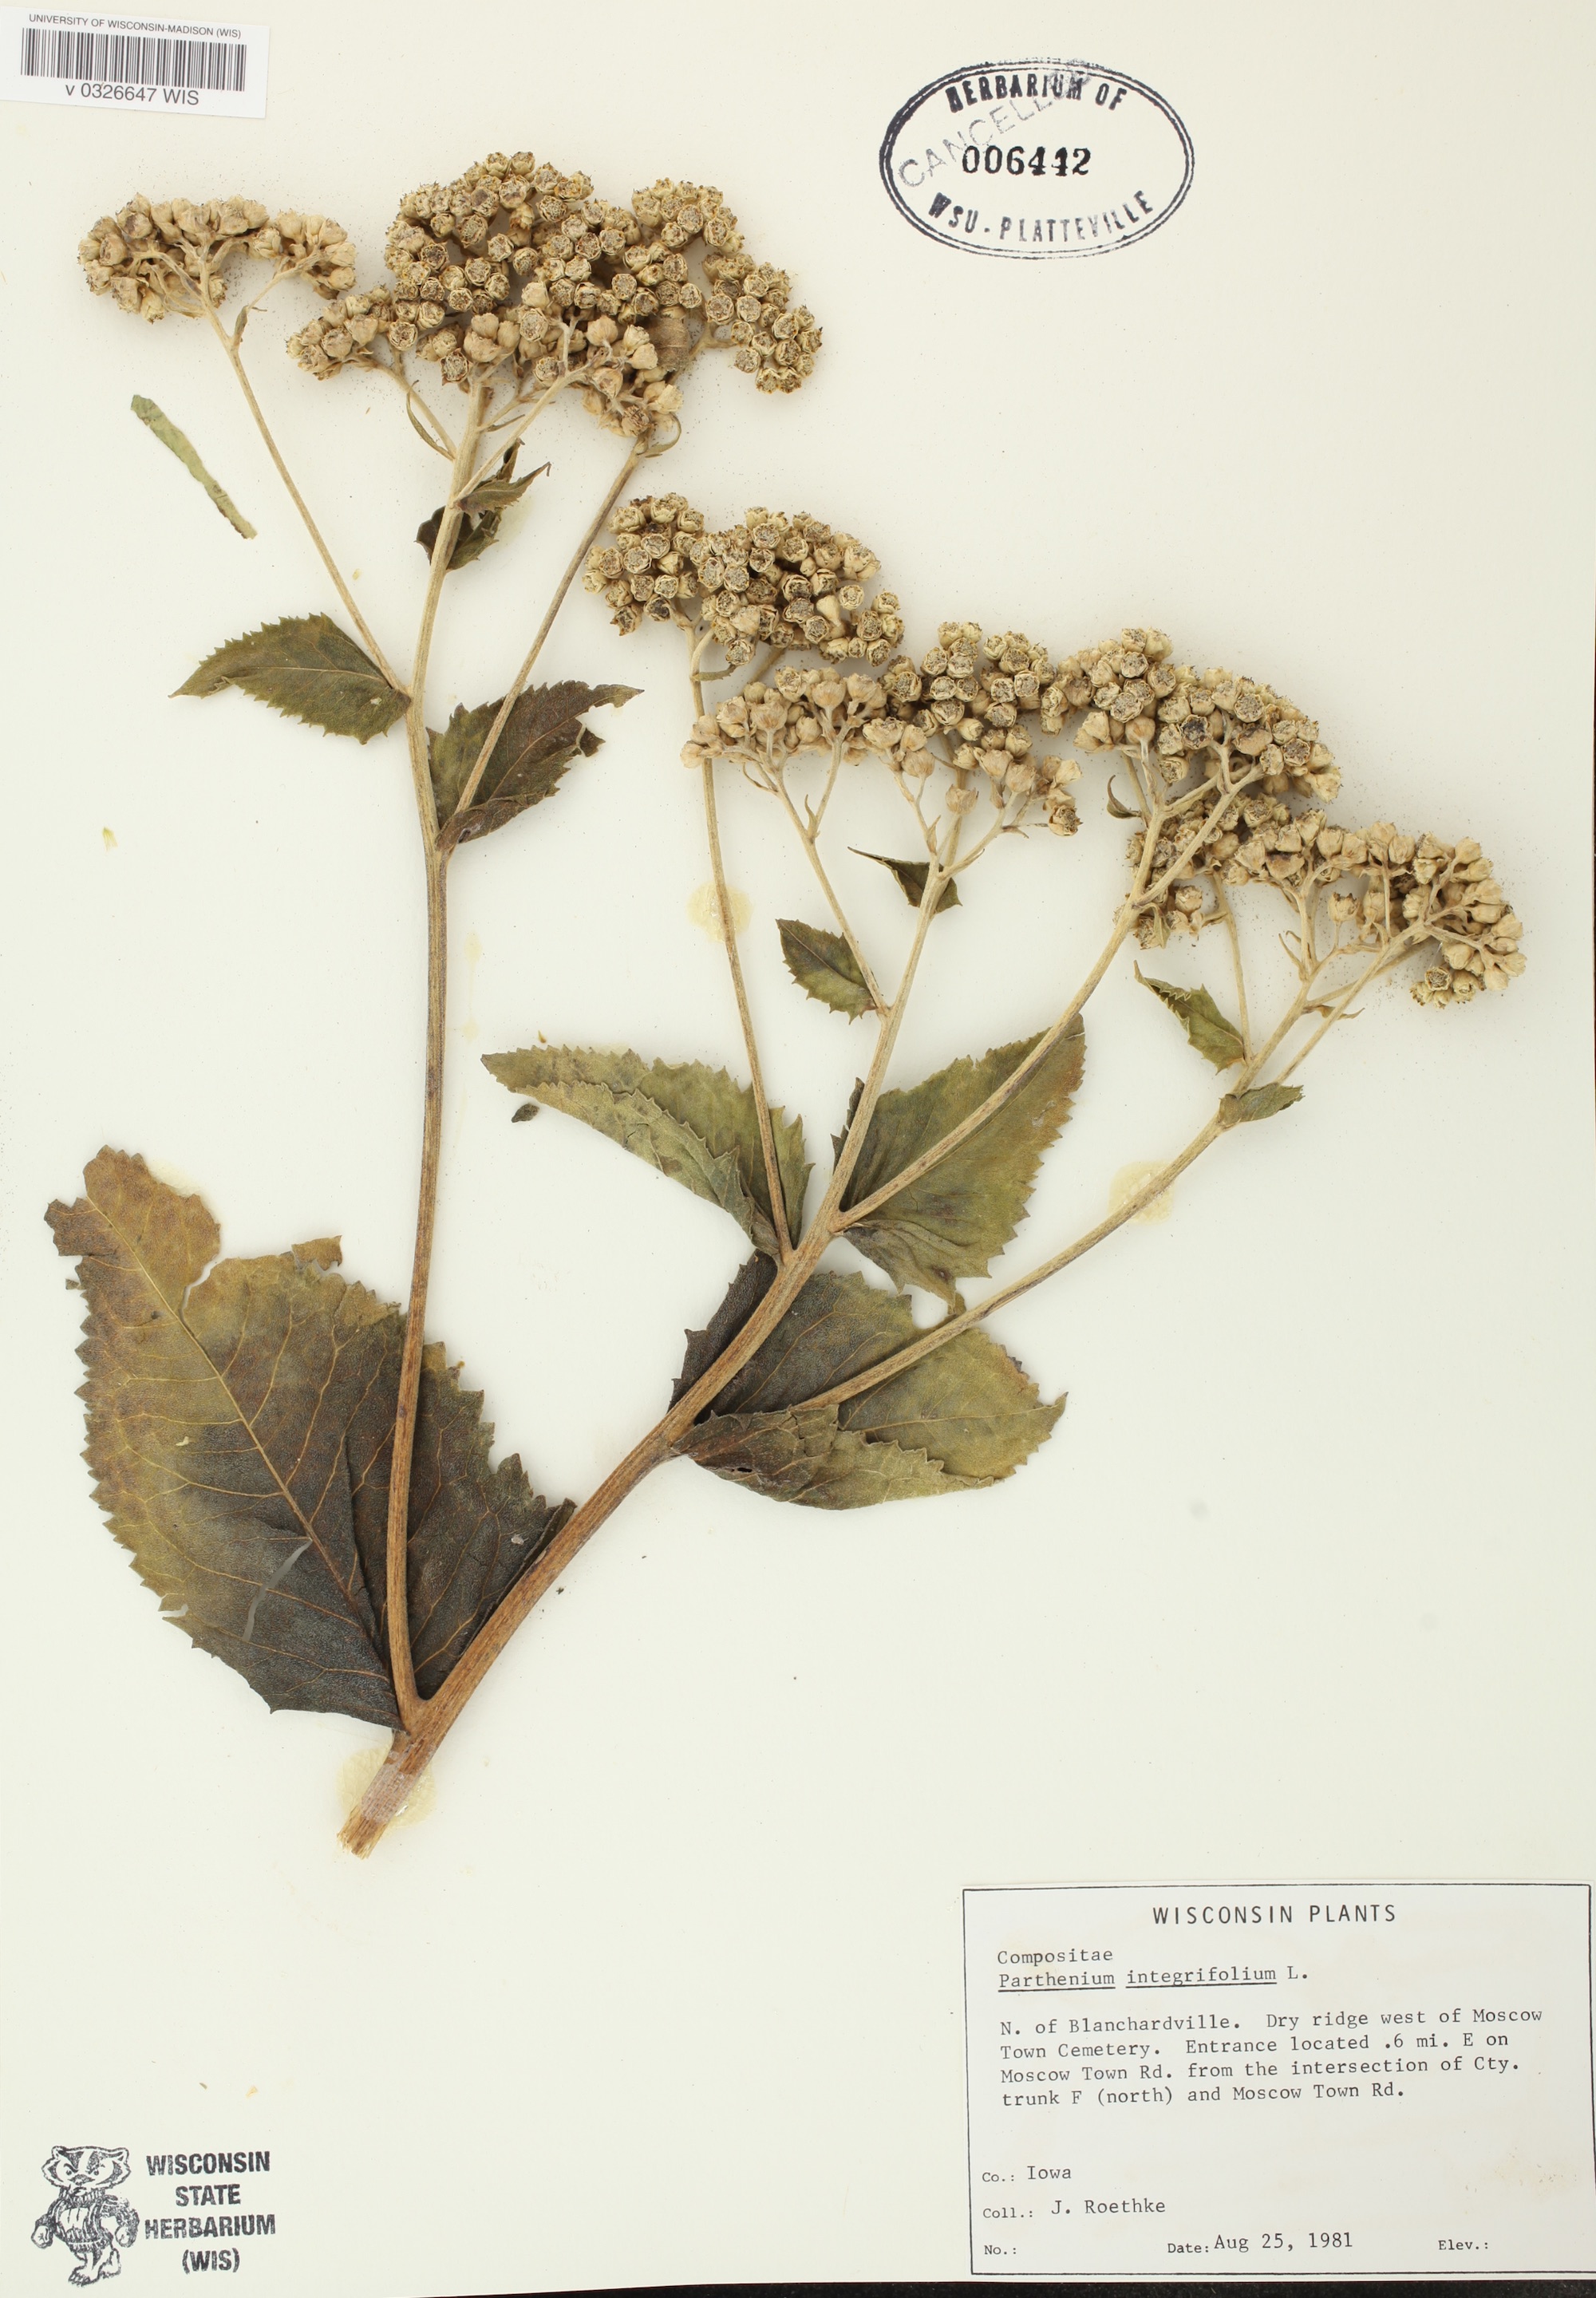 Wild Quinine specimen collected north of Blanchardville on August 25, 1981.